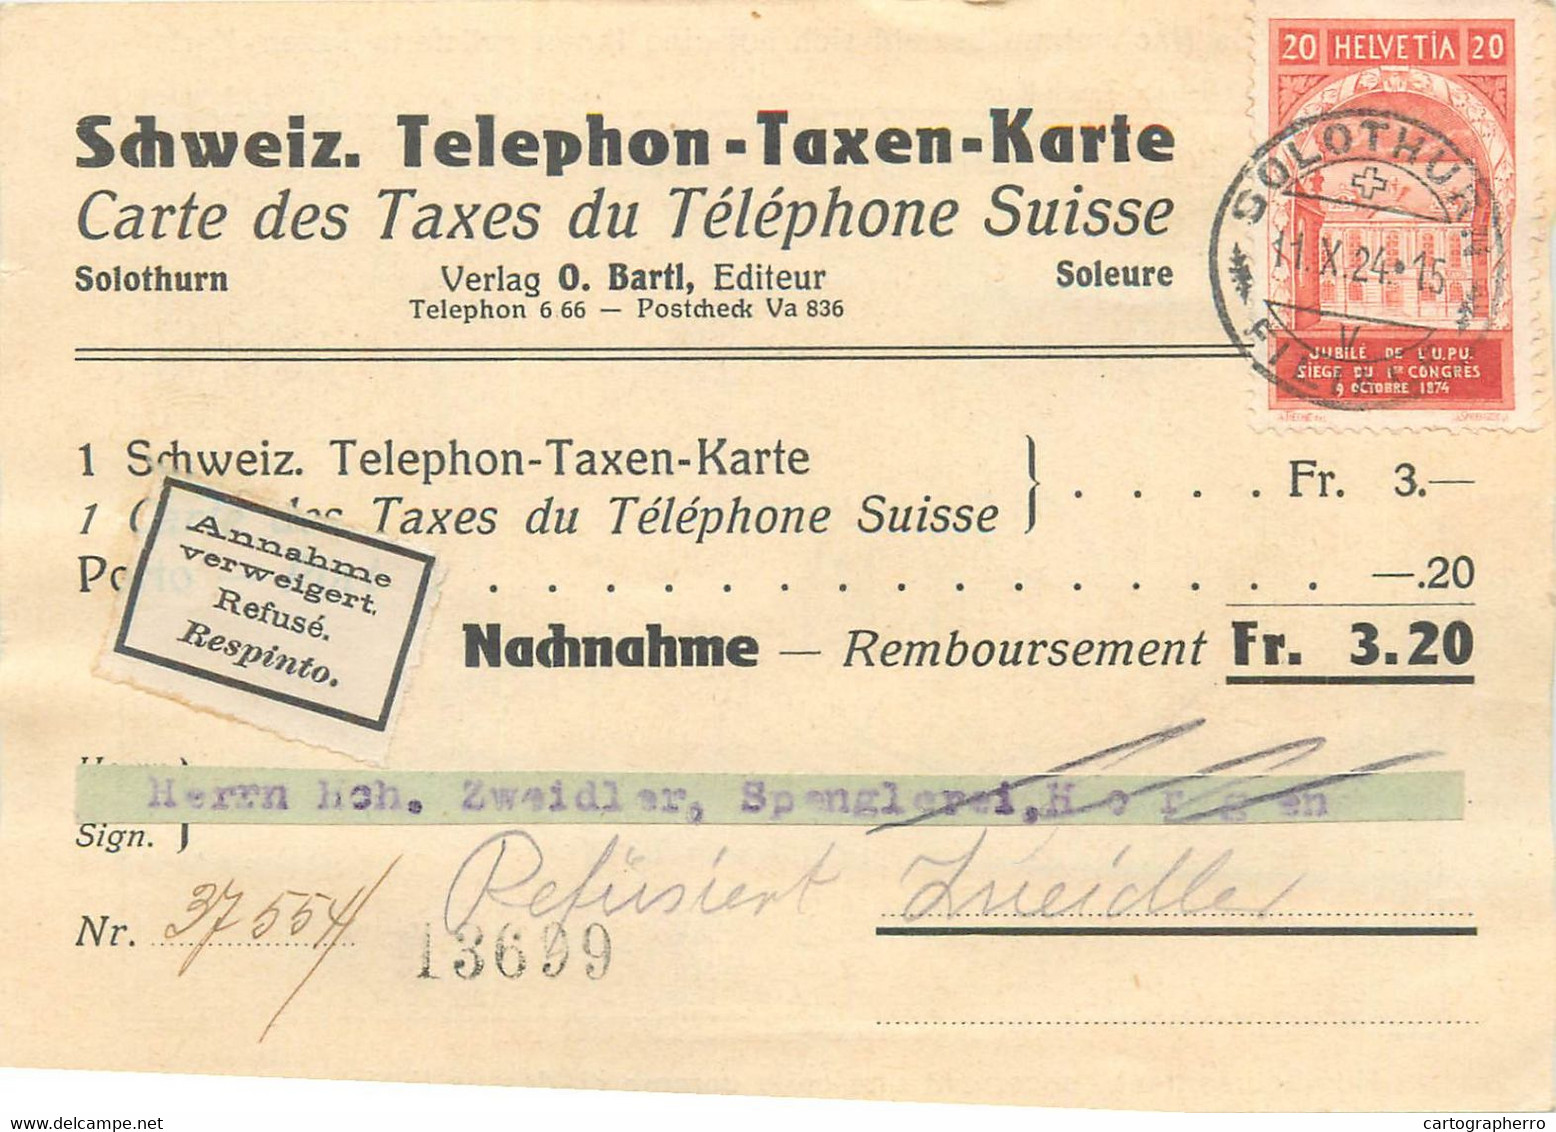 Carte Des Taxes Du Telephone Suisse 1924 Schweiz Telephon Taxen Karte Solothurn Switzerland Map - Telegraph